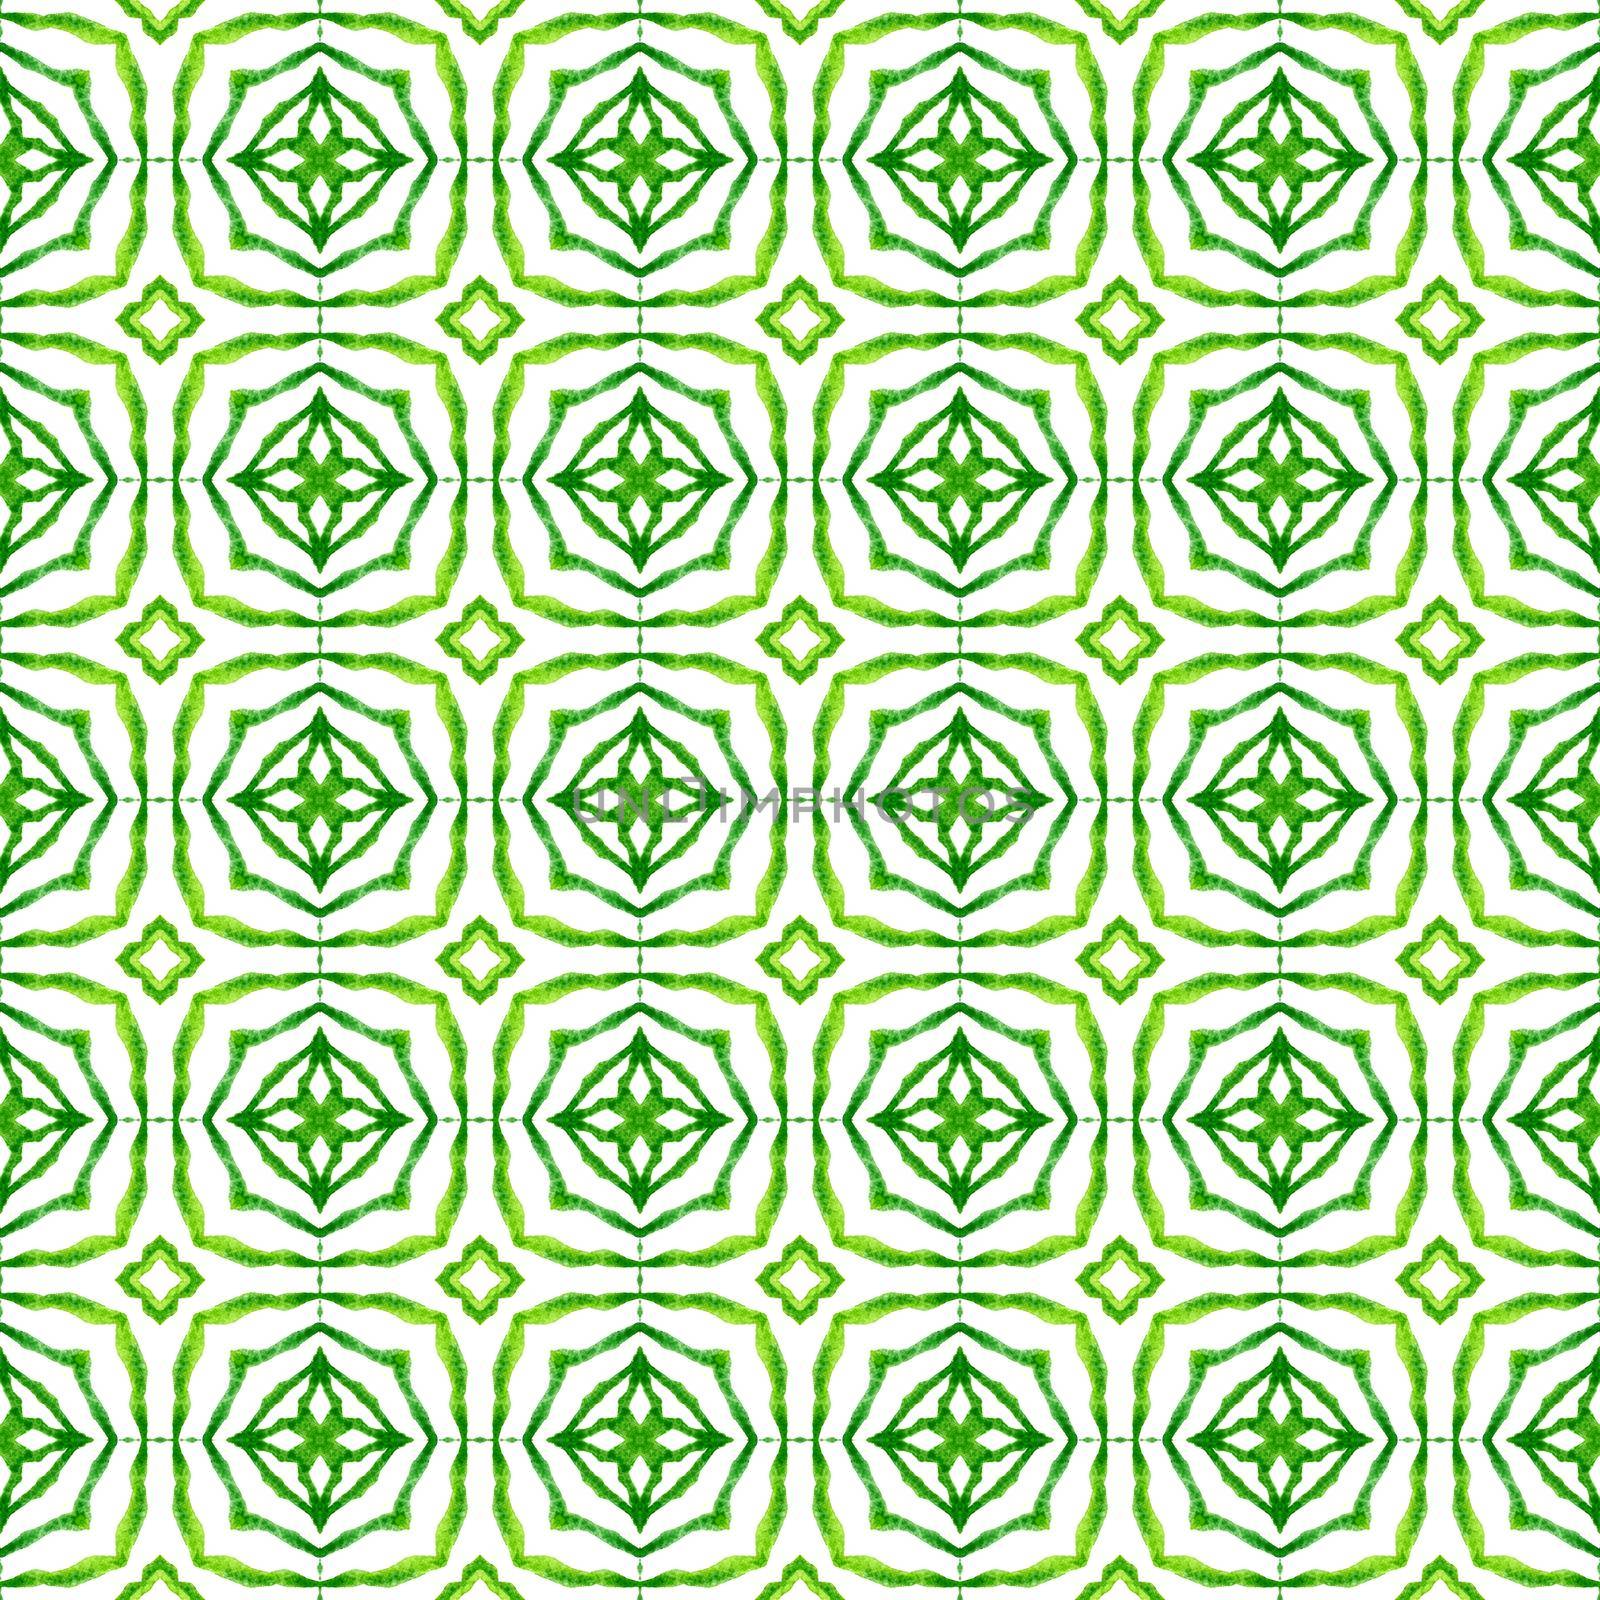 Chevron watercolor pattern. Green extraordinary by beginagain